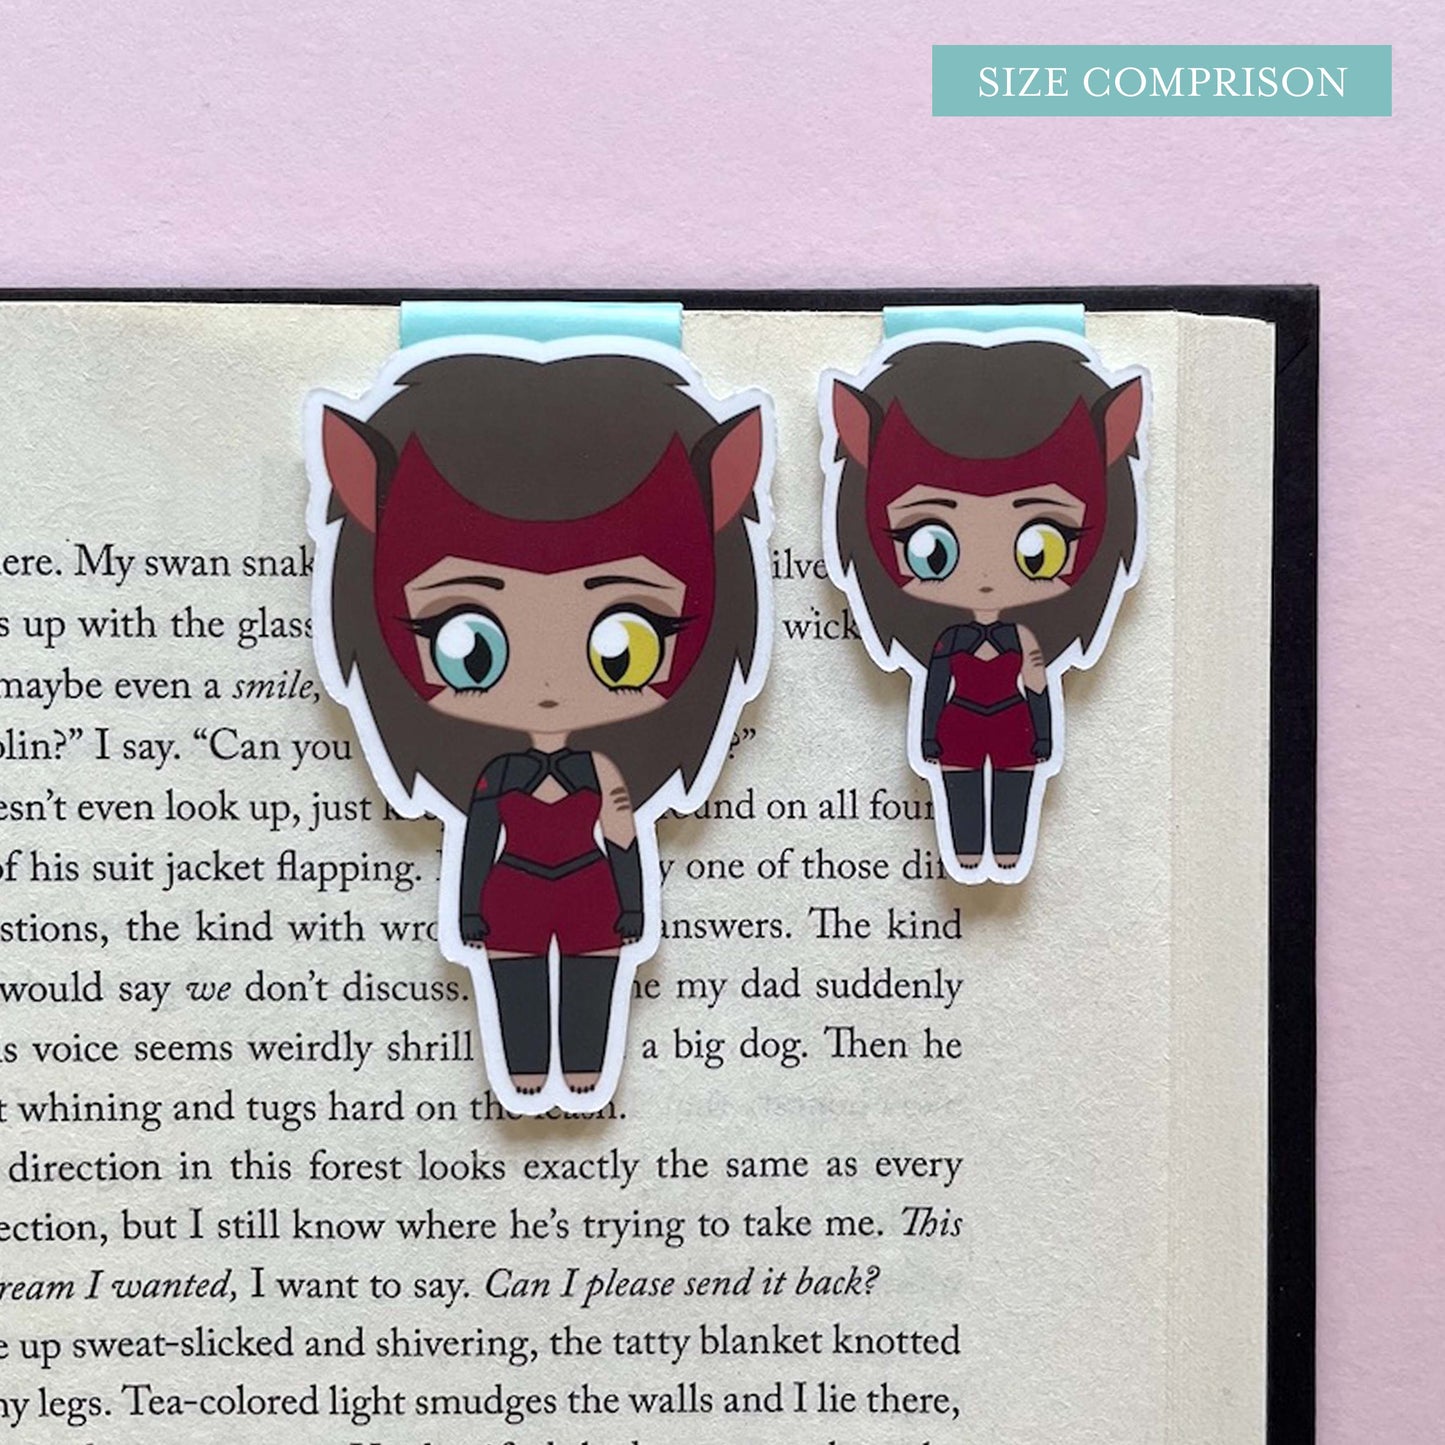 She-Ra and Catra "Catradora" Magnetic Bookmarks